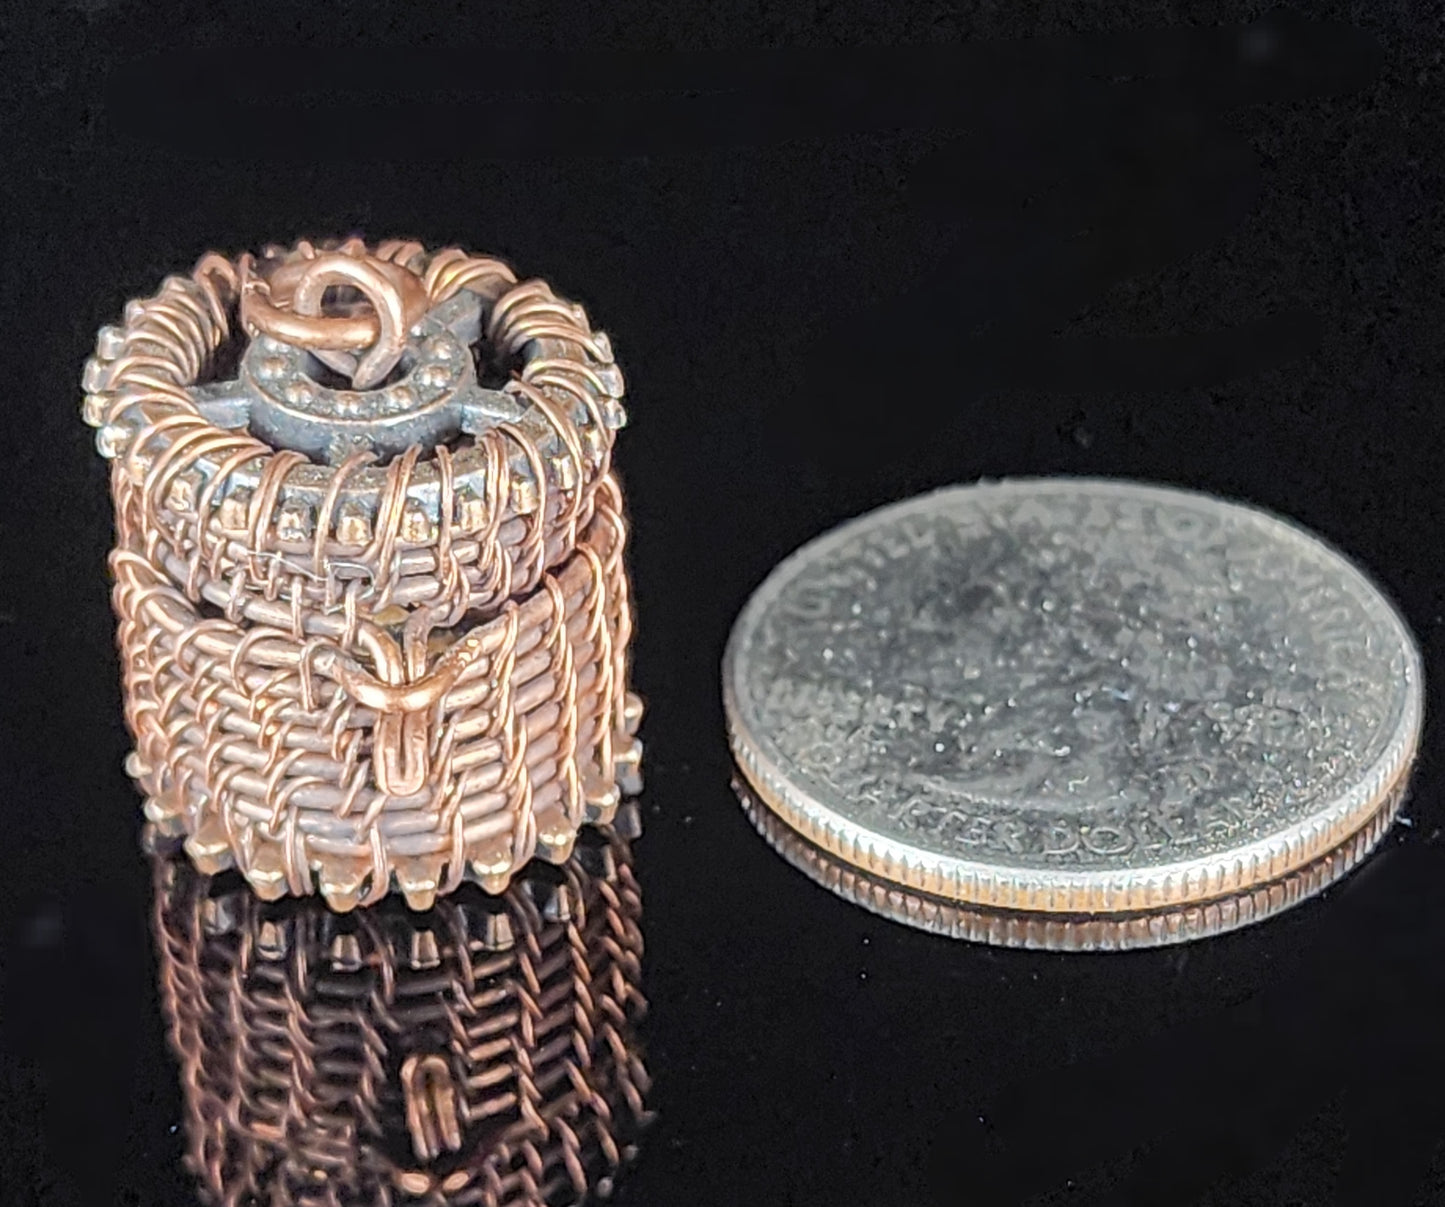 Woven Essential Oil Bead Copper Basket Pendant Necklace